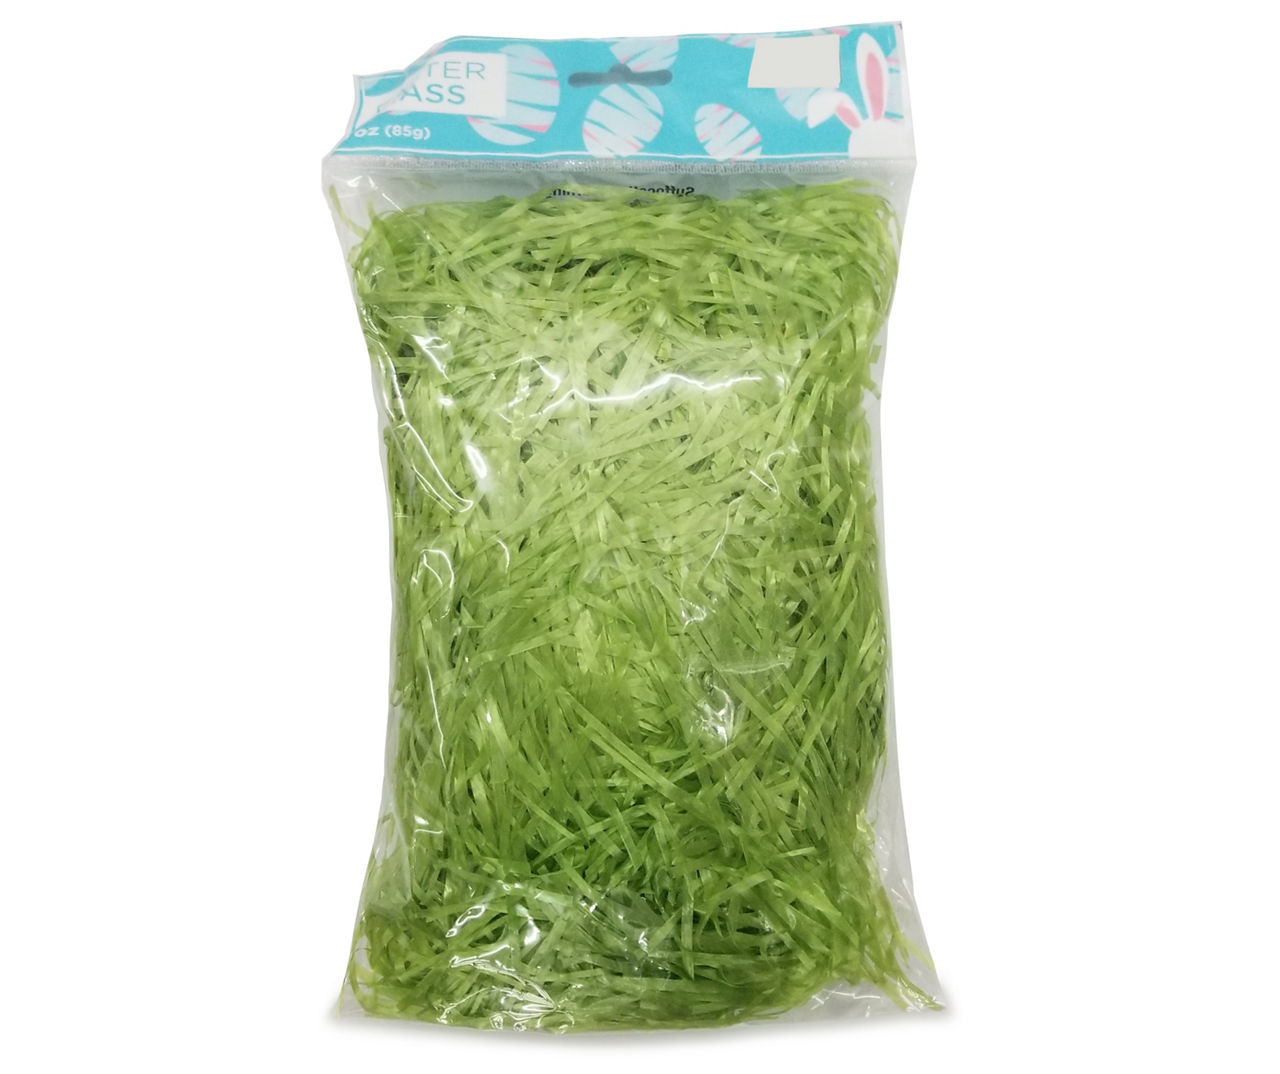 6 Packs Creatology Easter Grass Green Plastic Artificial 2 oz Each Pack 